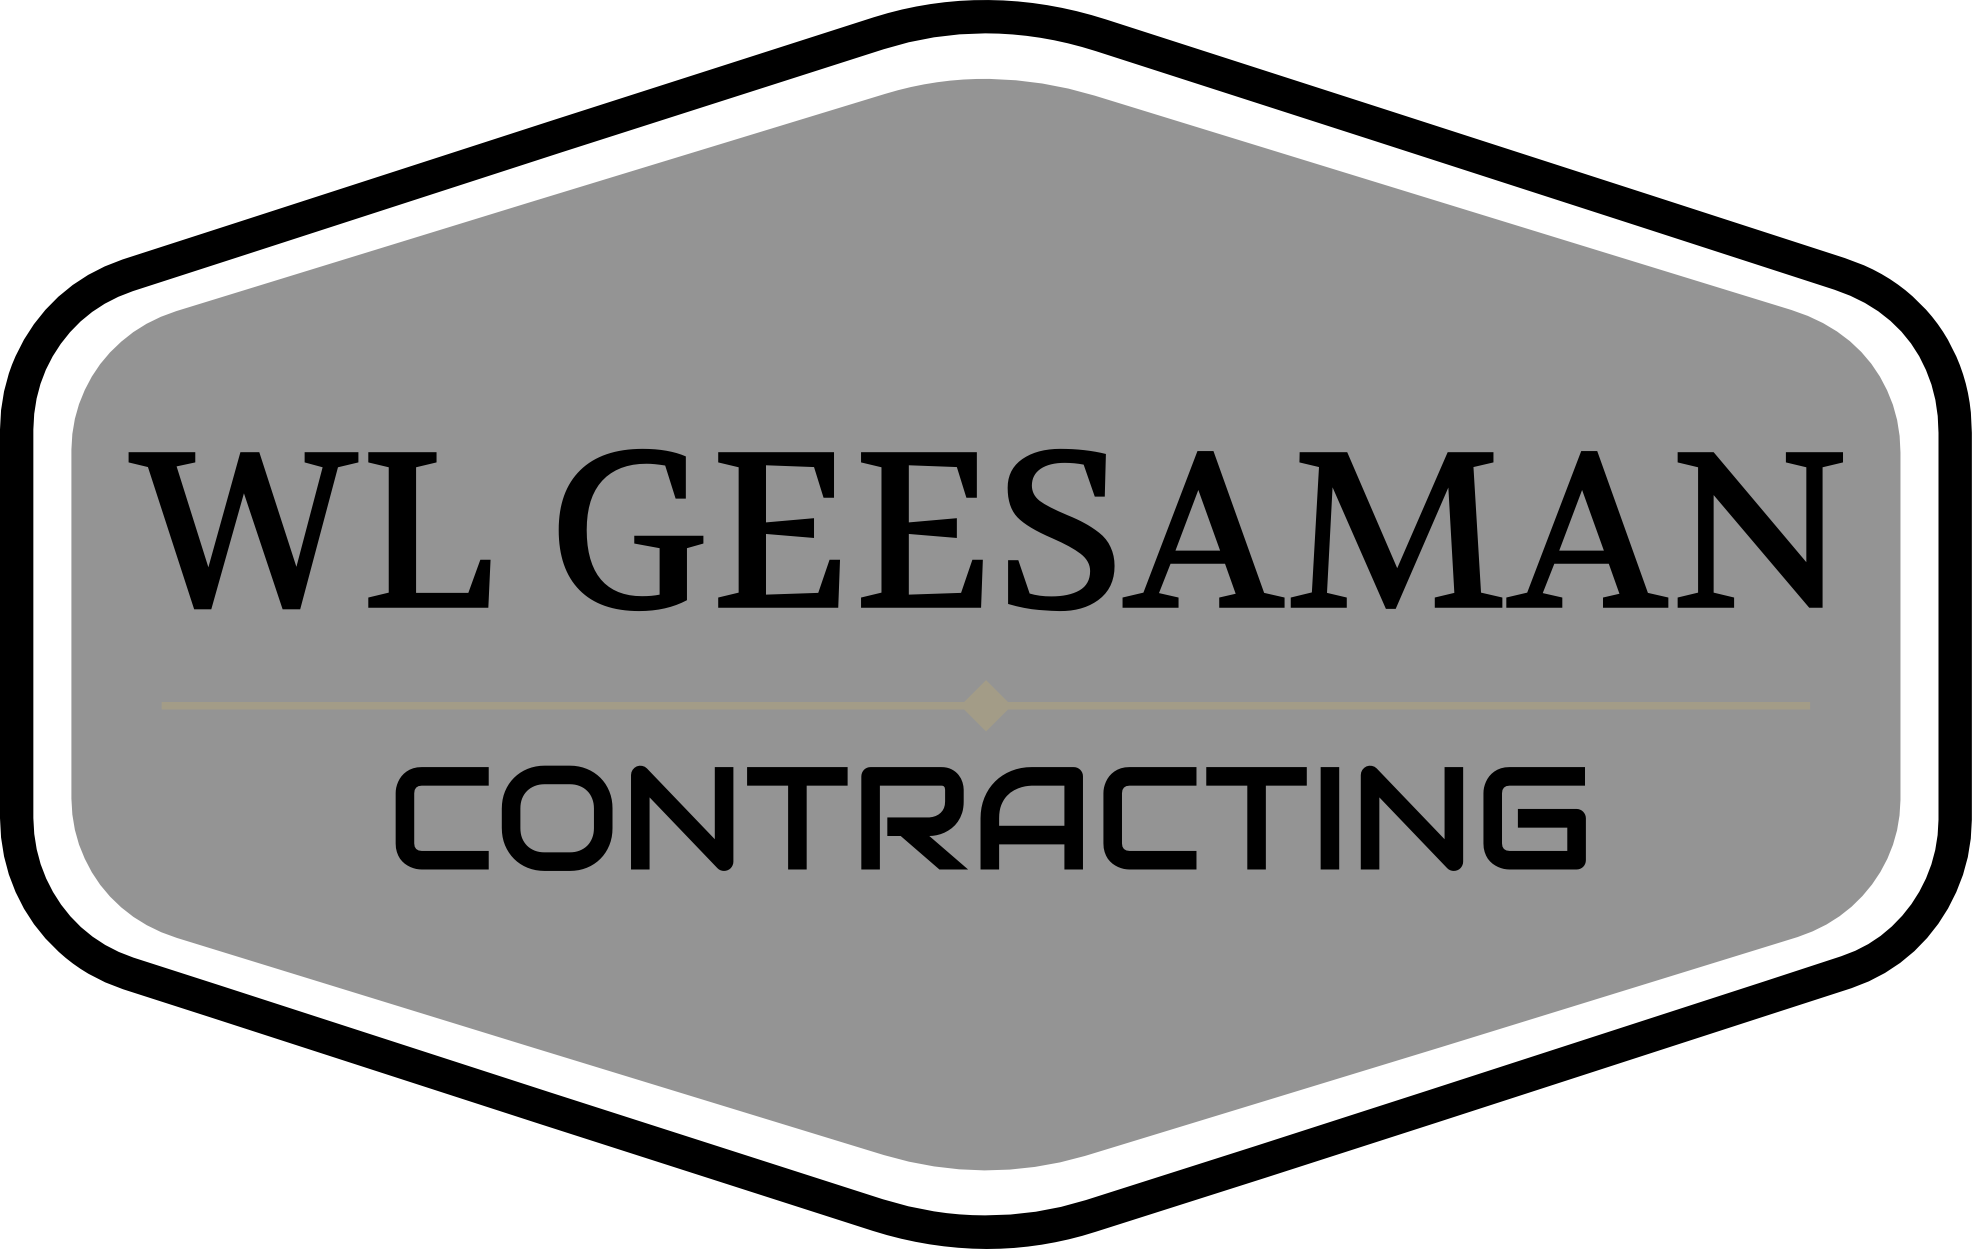 W. L. Geesaman Contracting Logo